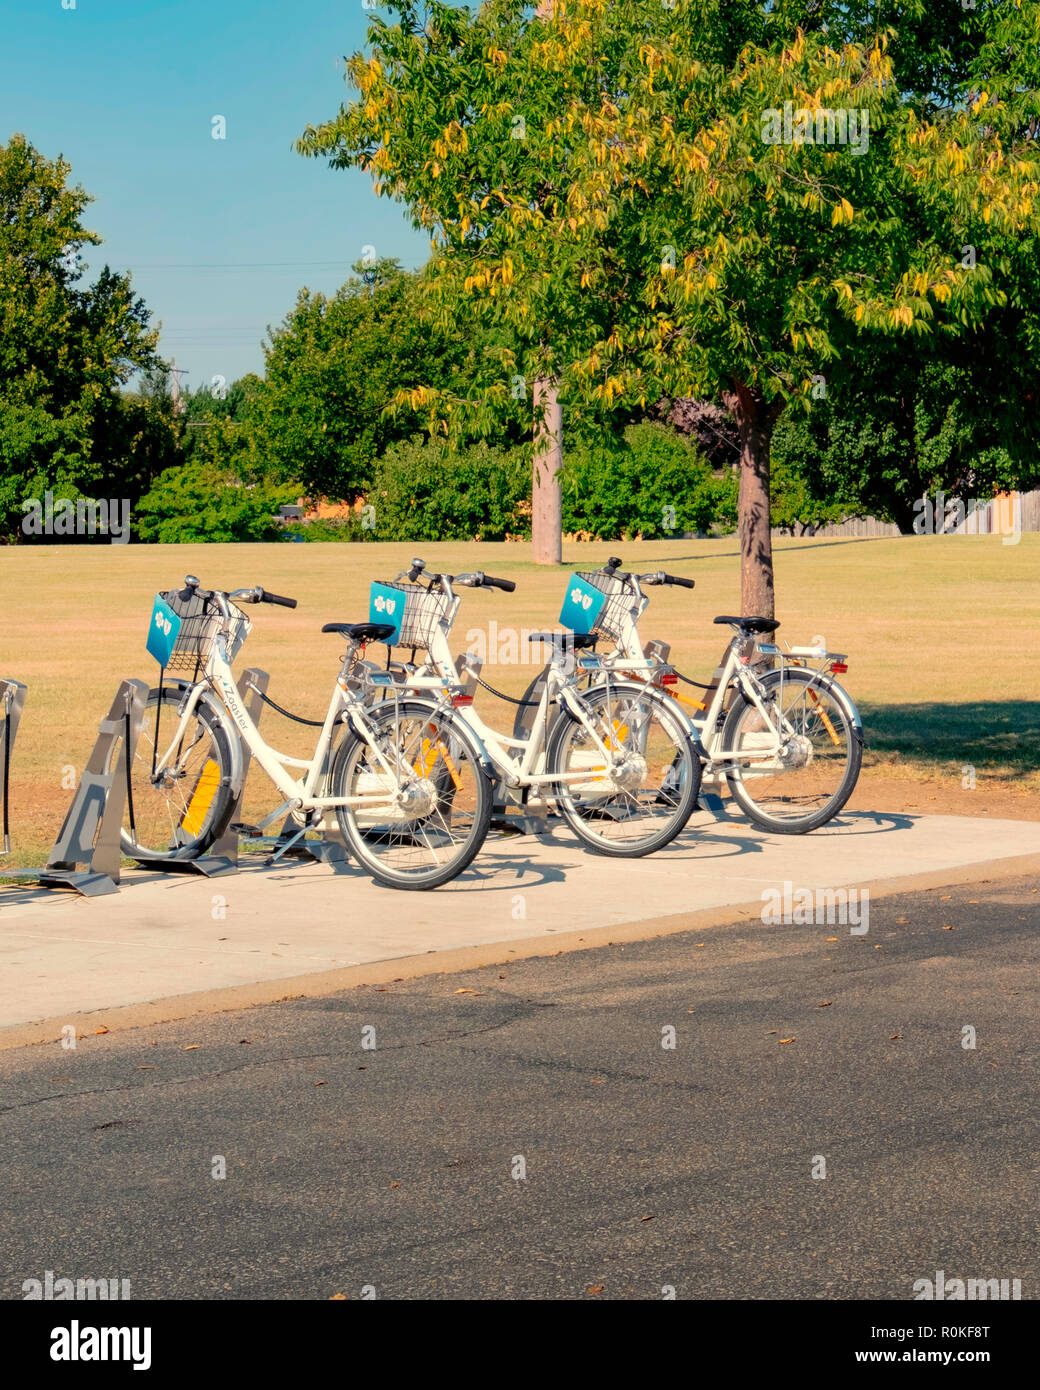 Bicycle rentals, bike share, near tourist attraction in Wichita, Kansas, USA. Stock Photo